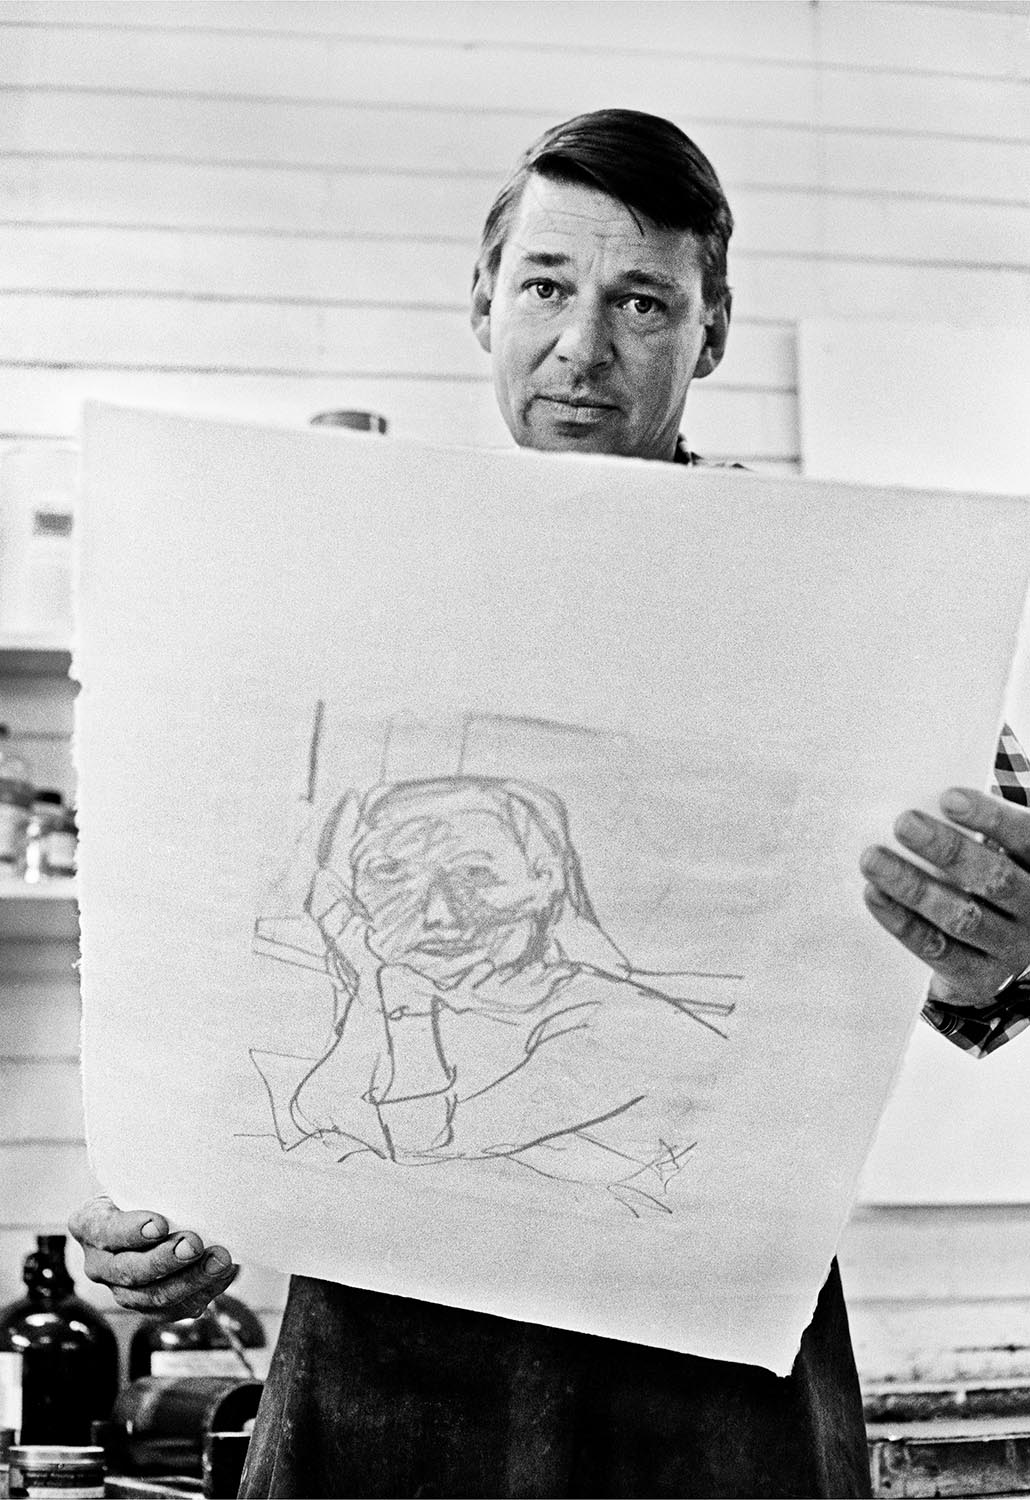  RICHARD DIEBENKORN   Tamarind Lithography Workshop, Los Angeles, California, 1962  